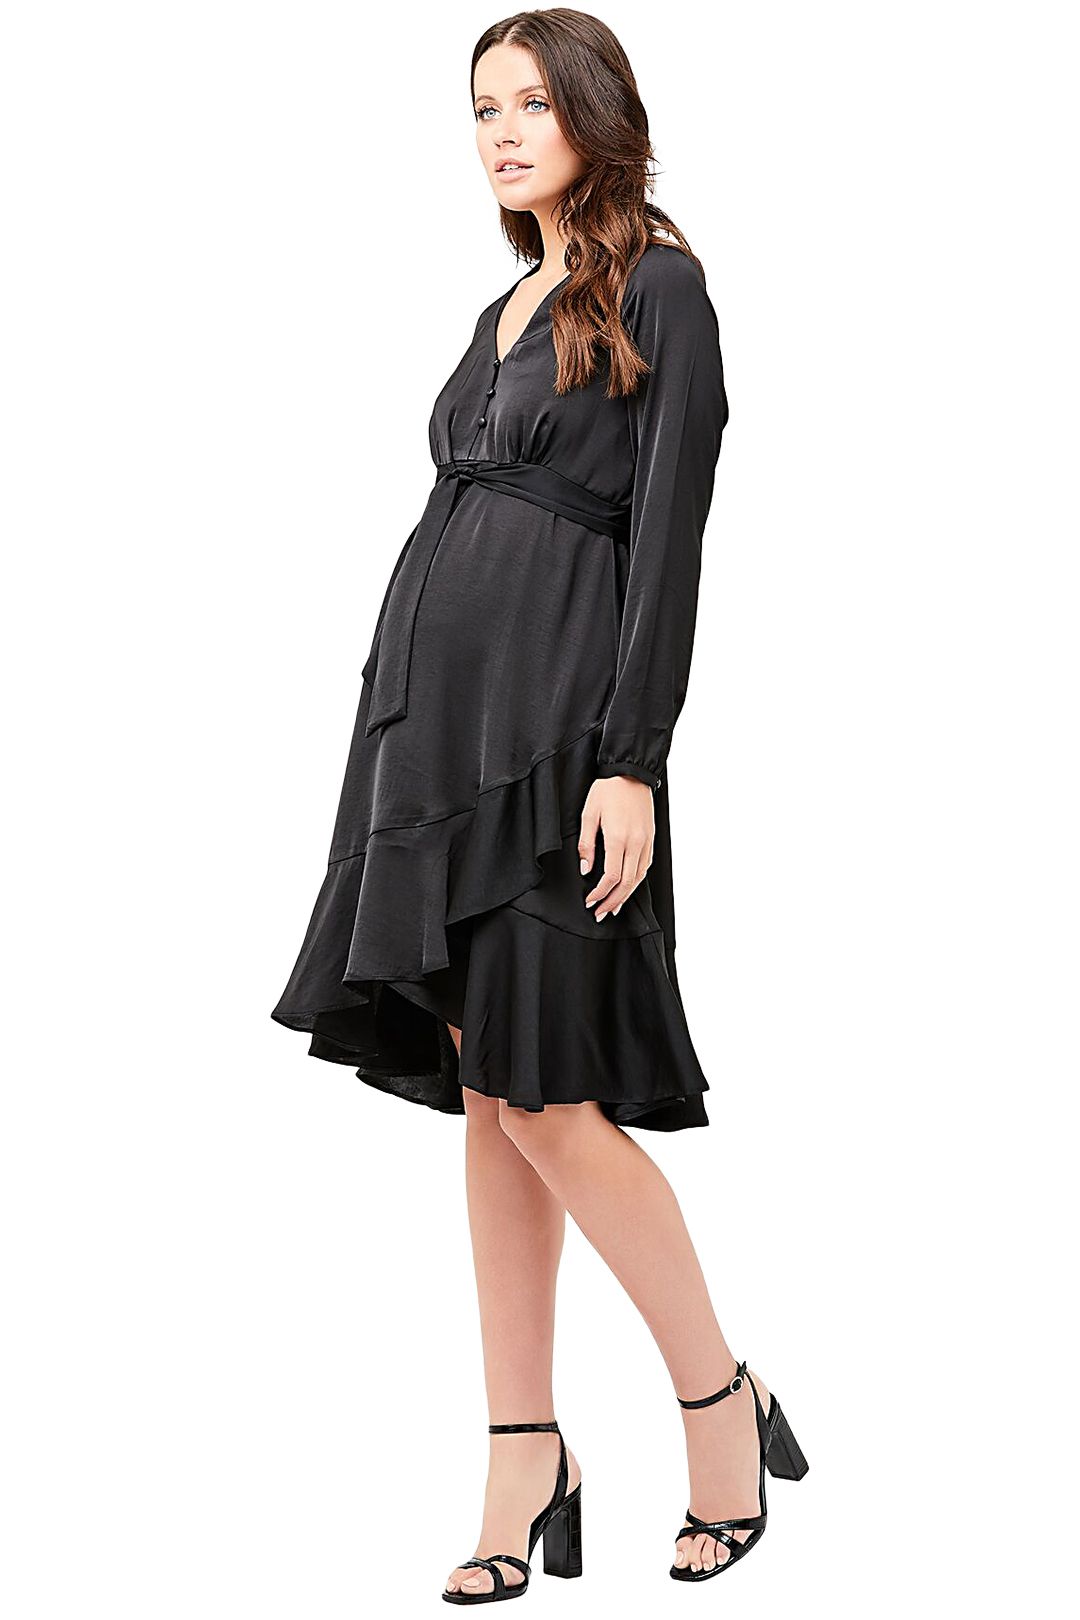 Ripe-Maternity-Satin-Front-Dress-Black-Side